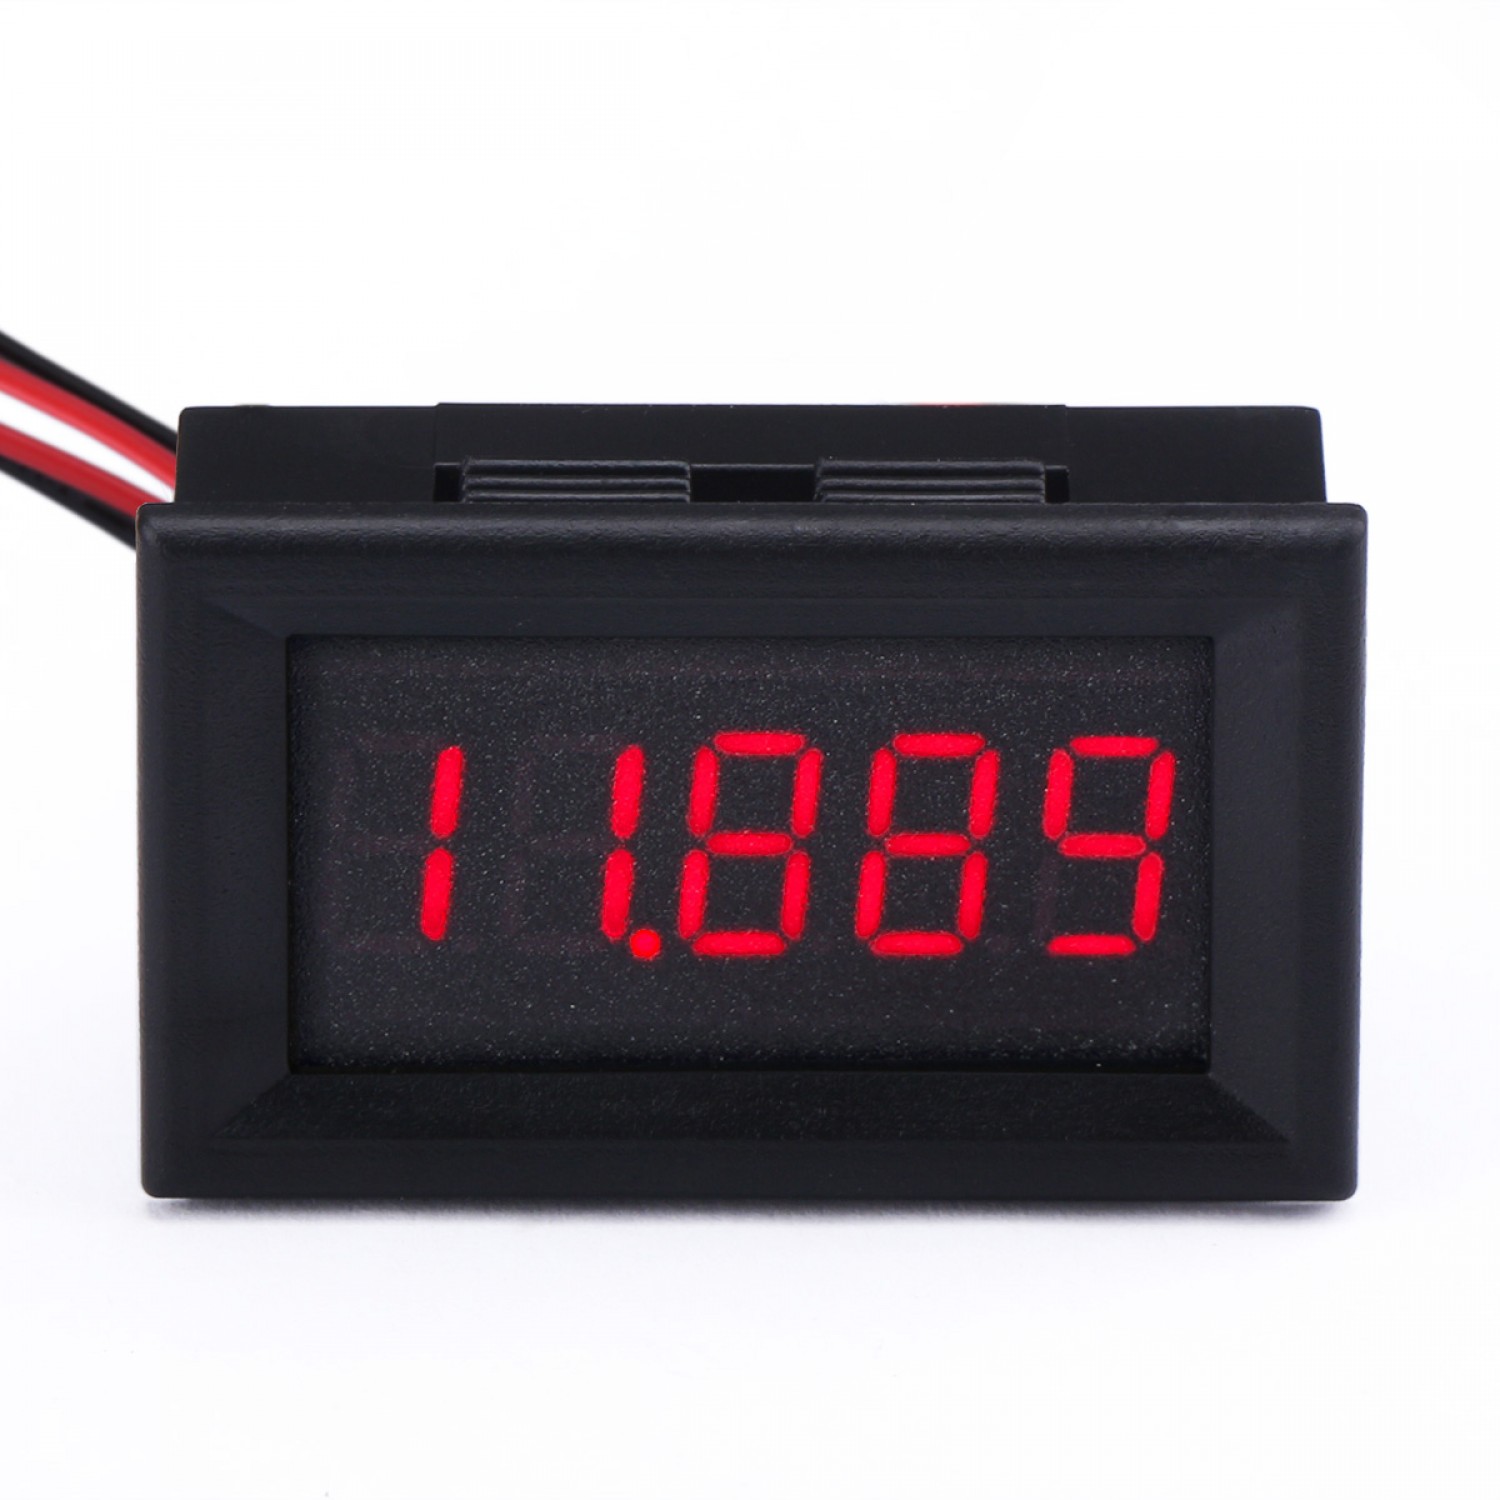 Miniature Digital Voltmeter